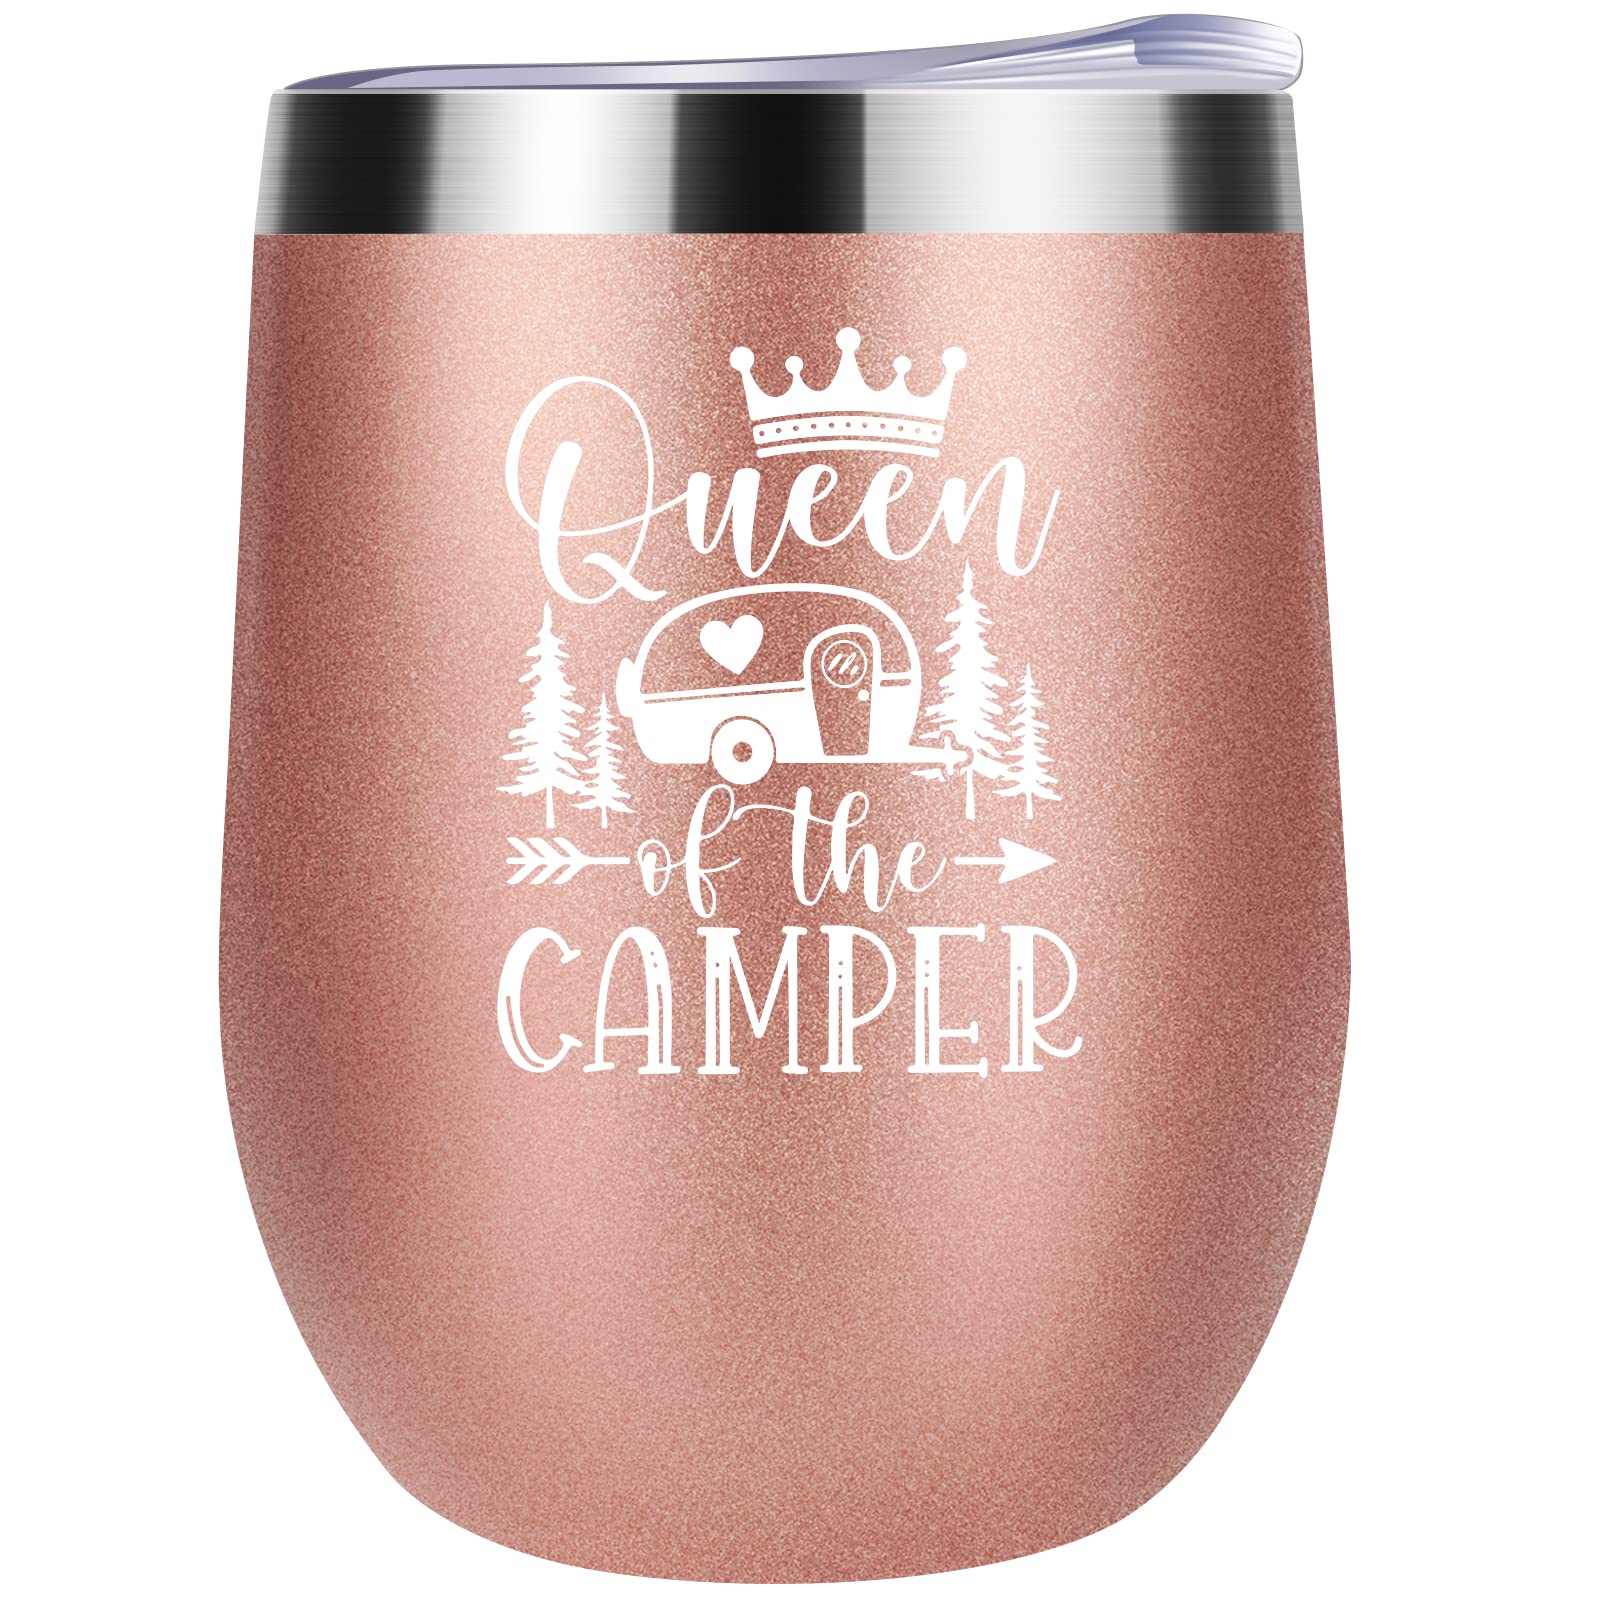 Happy Camper - RV Camping - Engraved YETI Tumbler